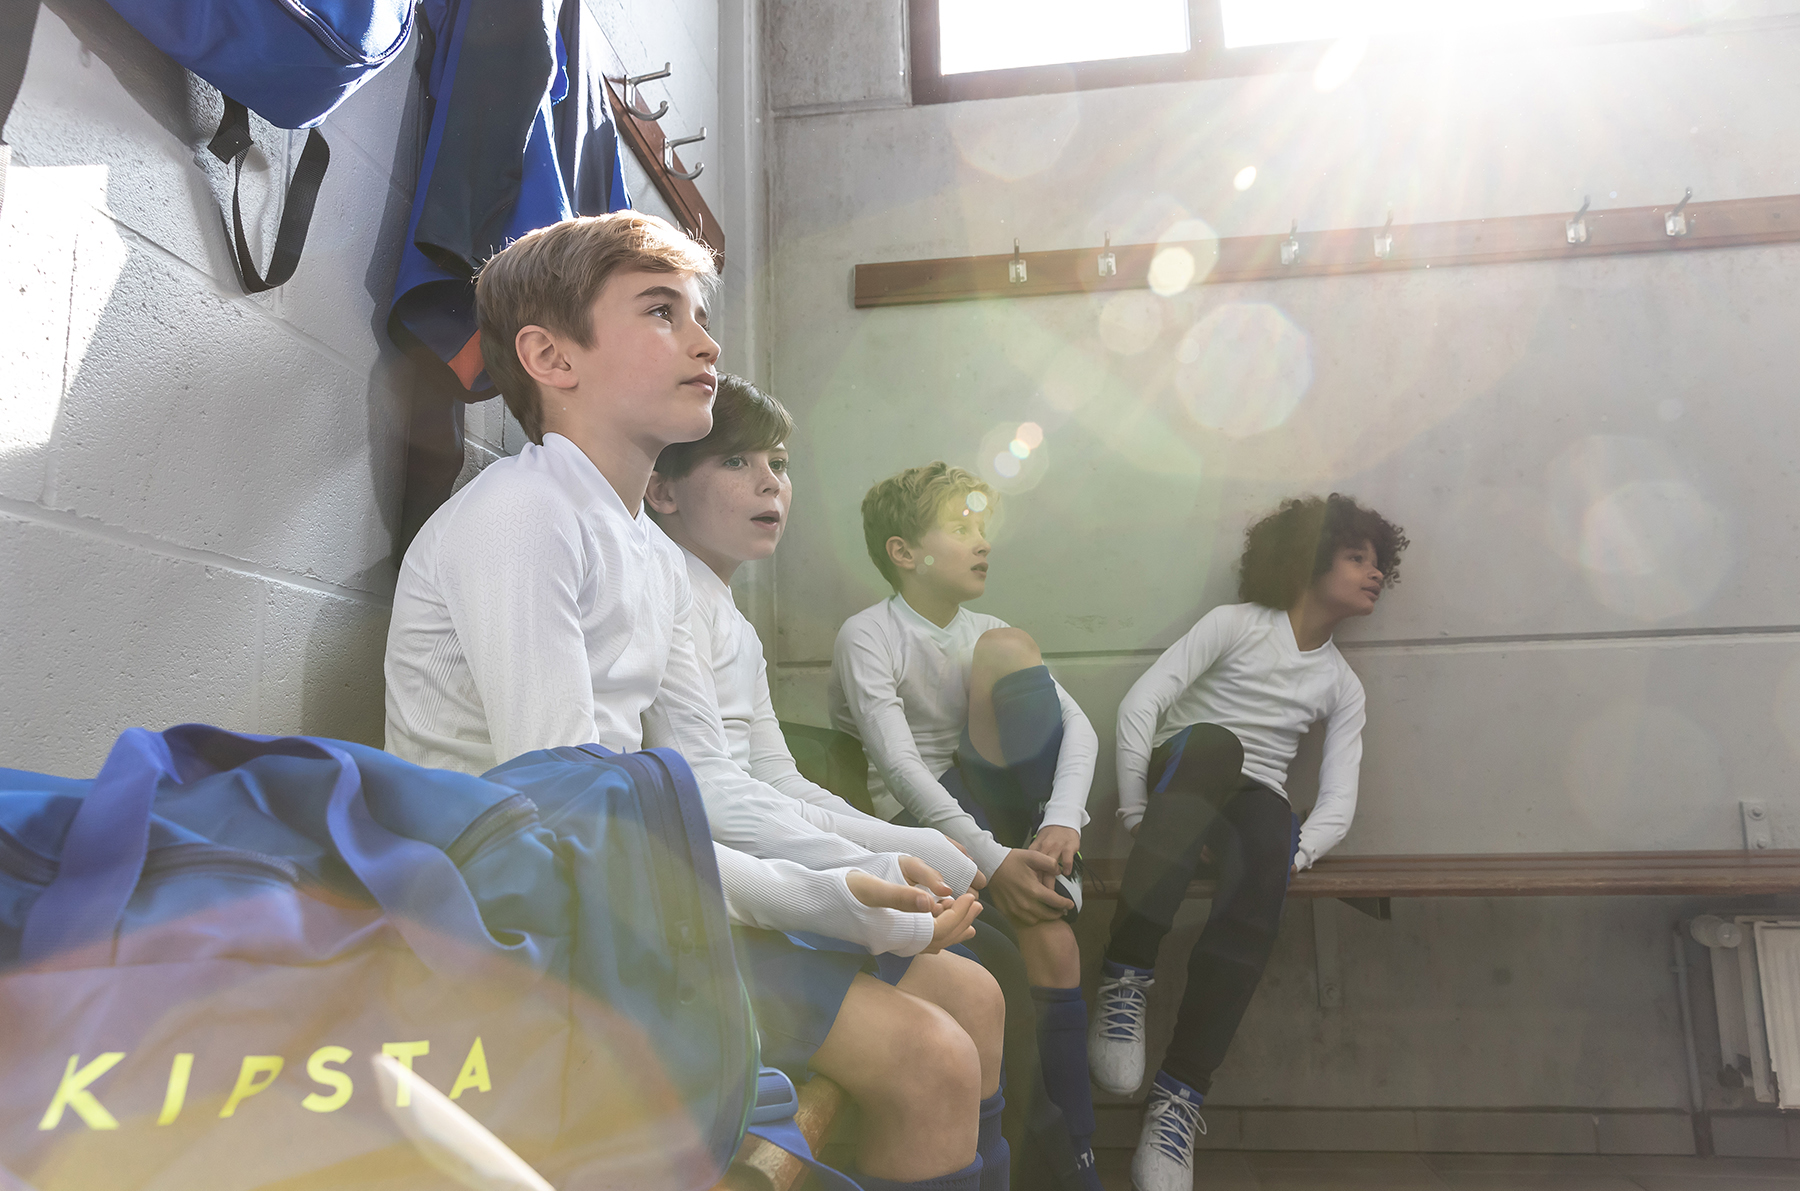 6 Kids Soccer2 by Decathloncover.jpg